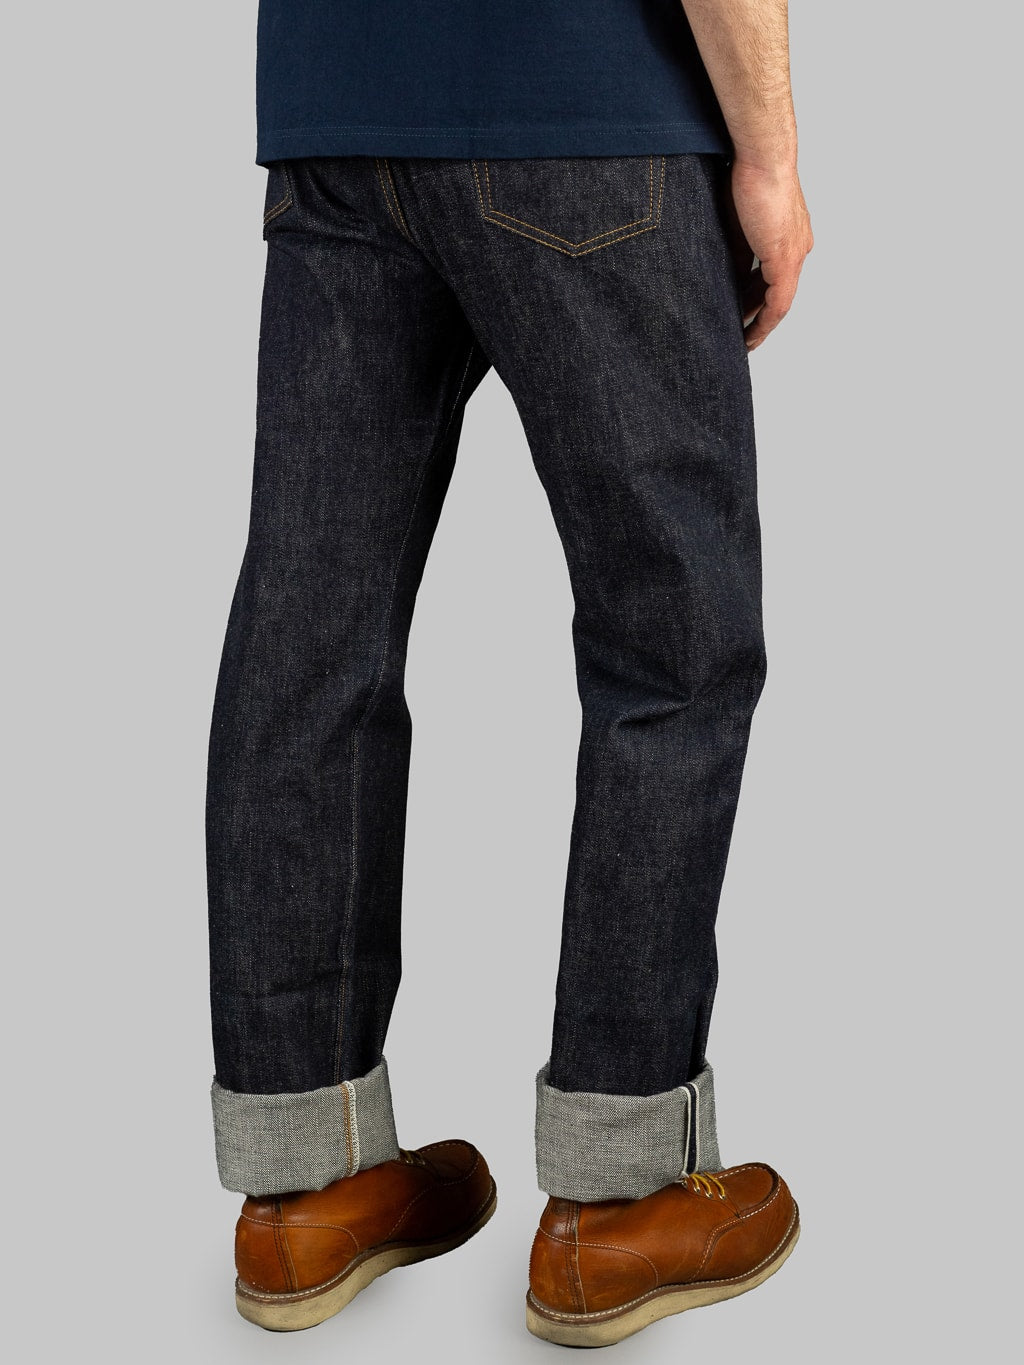 tcb 50s regular straight indigo selvedge japanese jeans back look